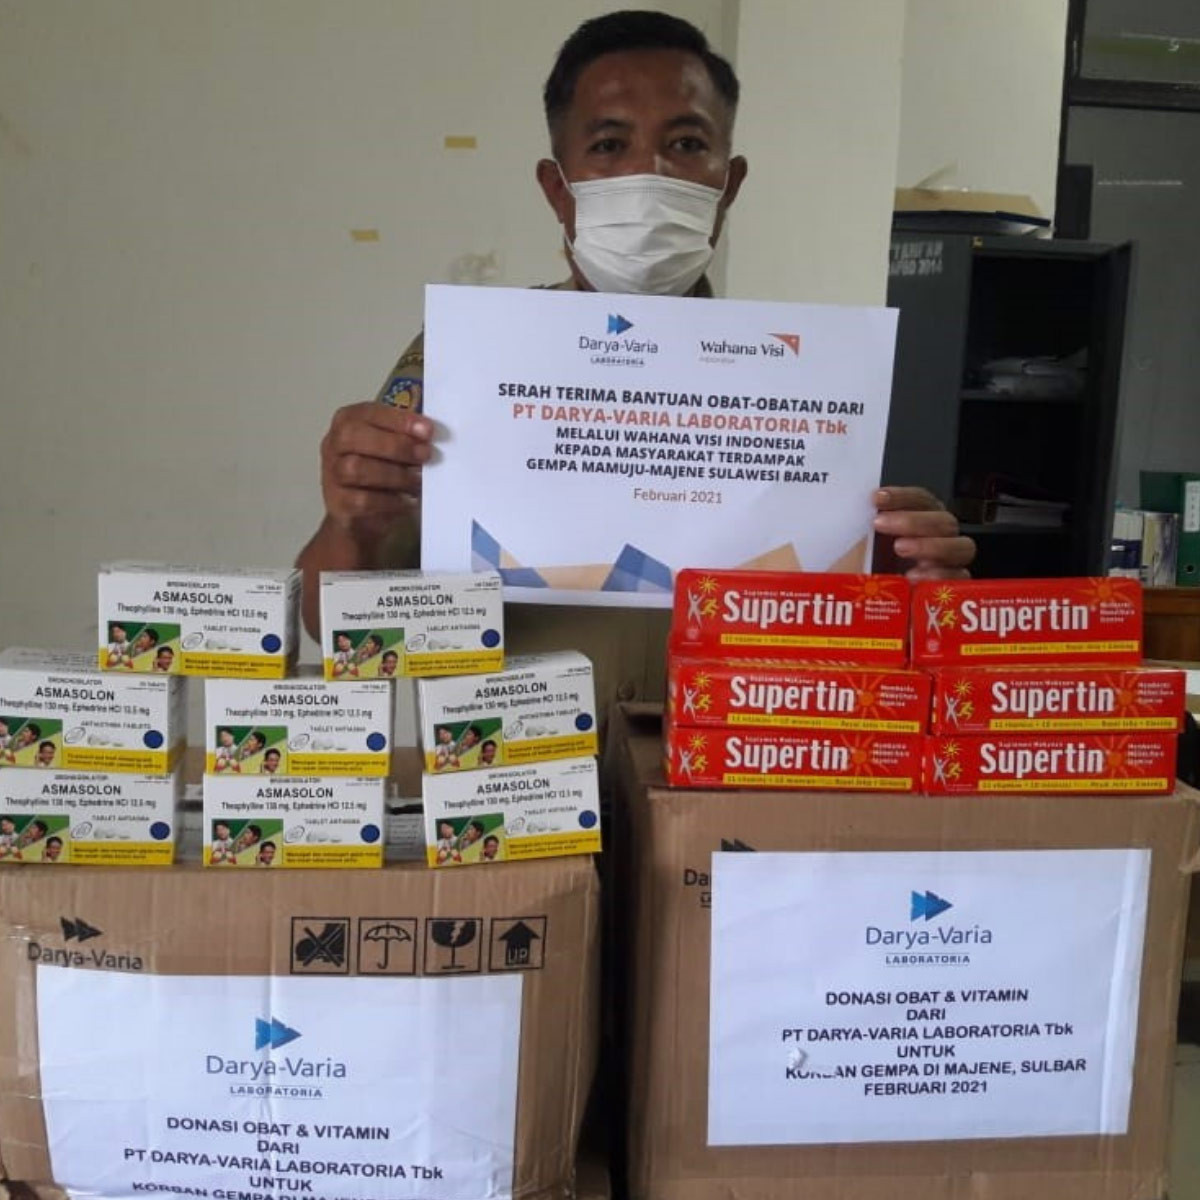 Dukung WVI, Darya-Varia Bantu Korban Bencana Gempa Sulawesi Barat 